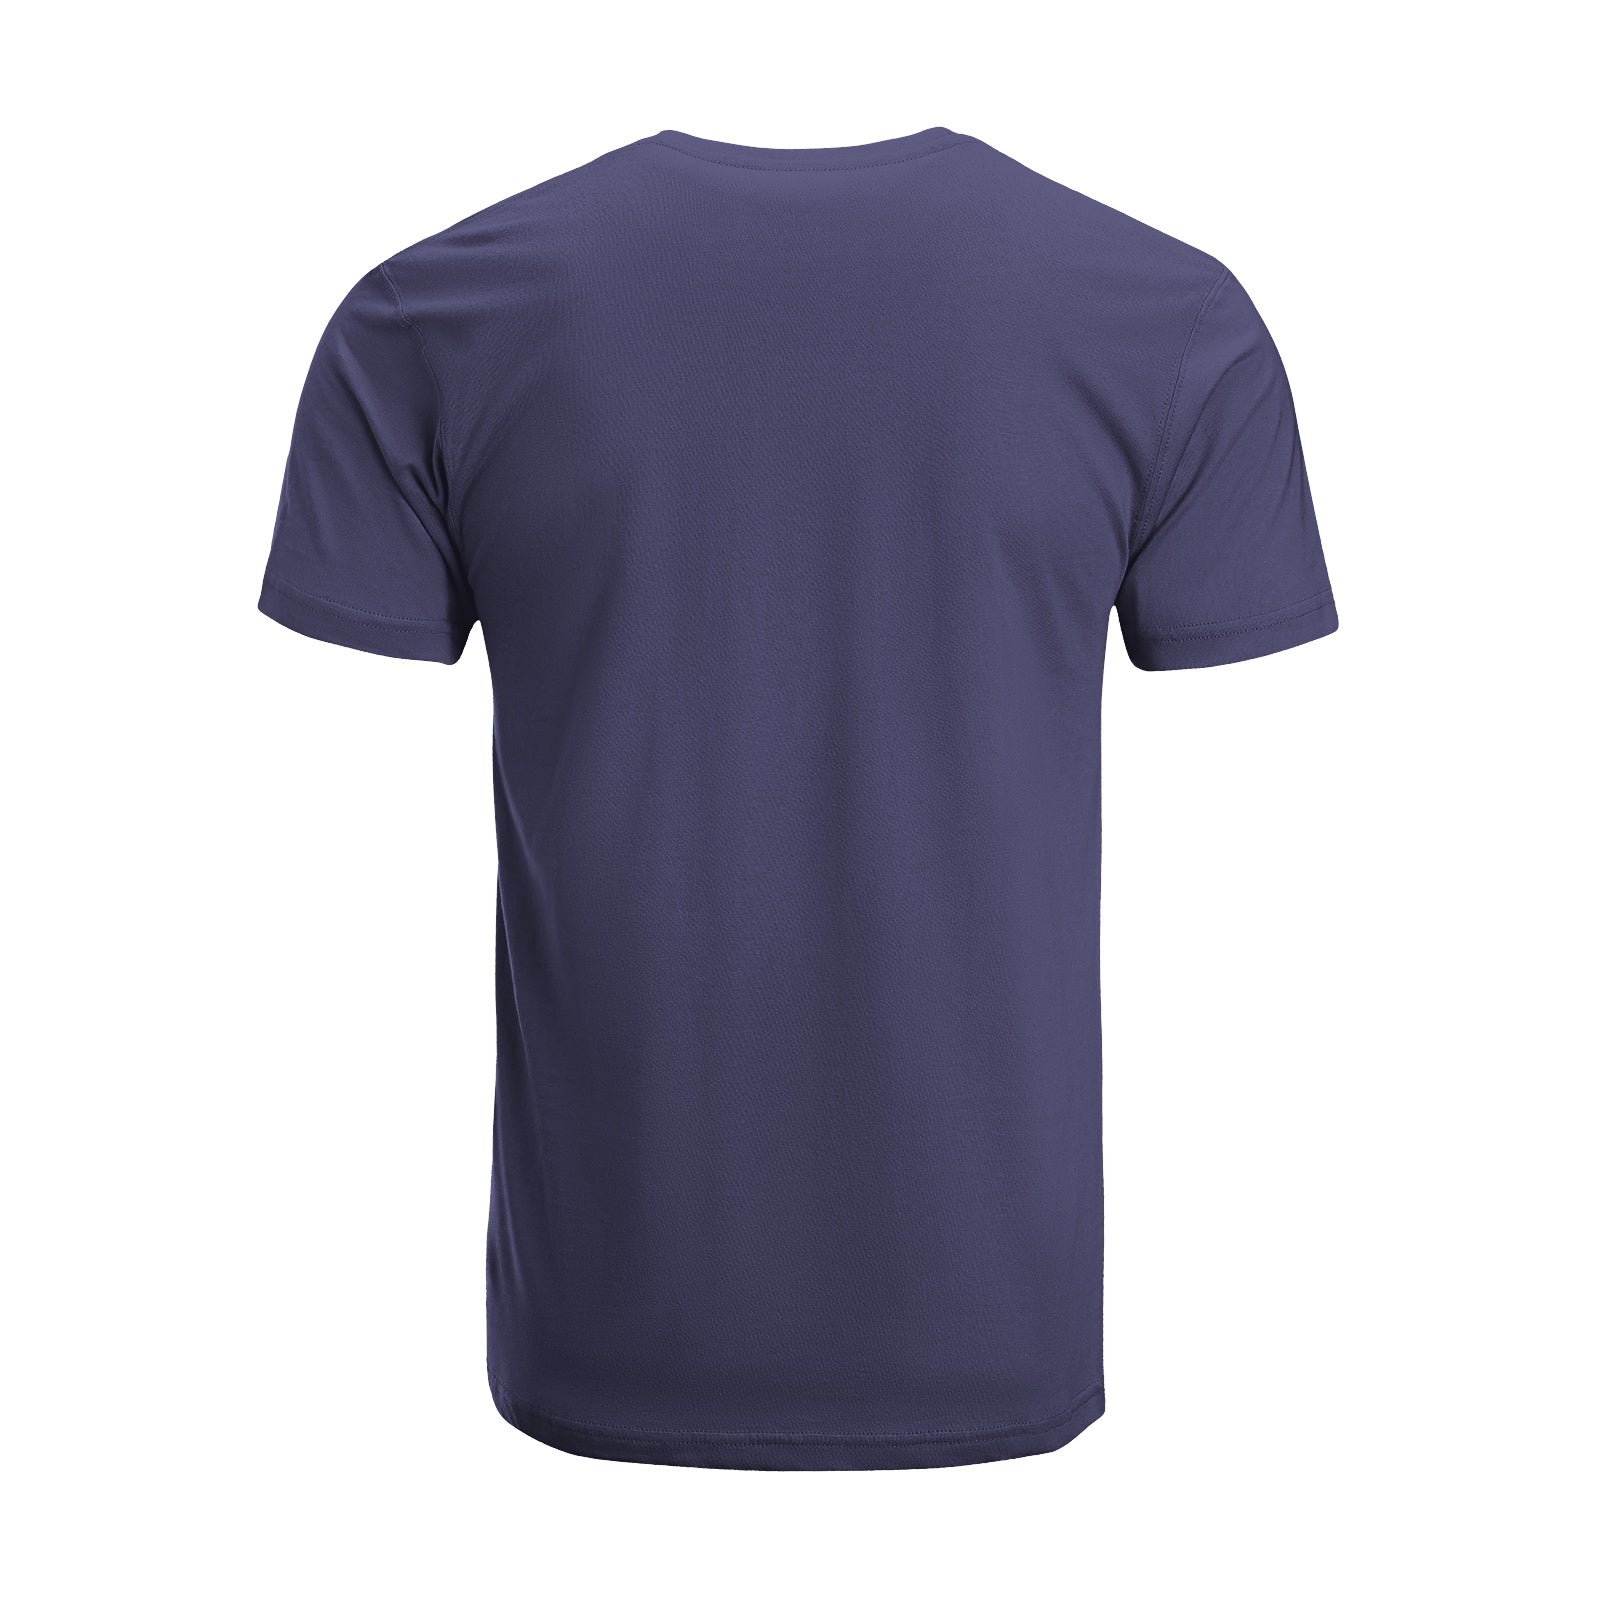 Unisex Short Sleeve Crew Neck Cotton Jersey T-Shirt DOG 11 - Tara-Outfits.com